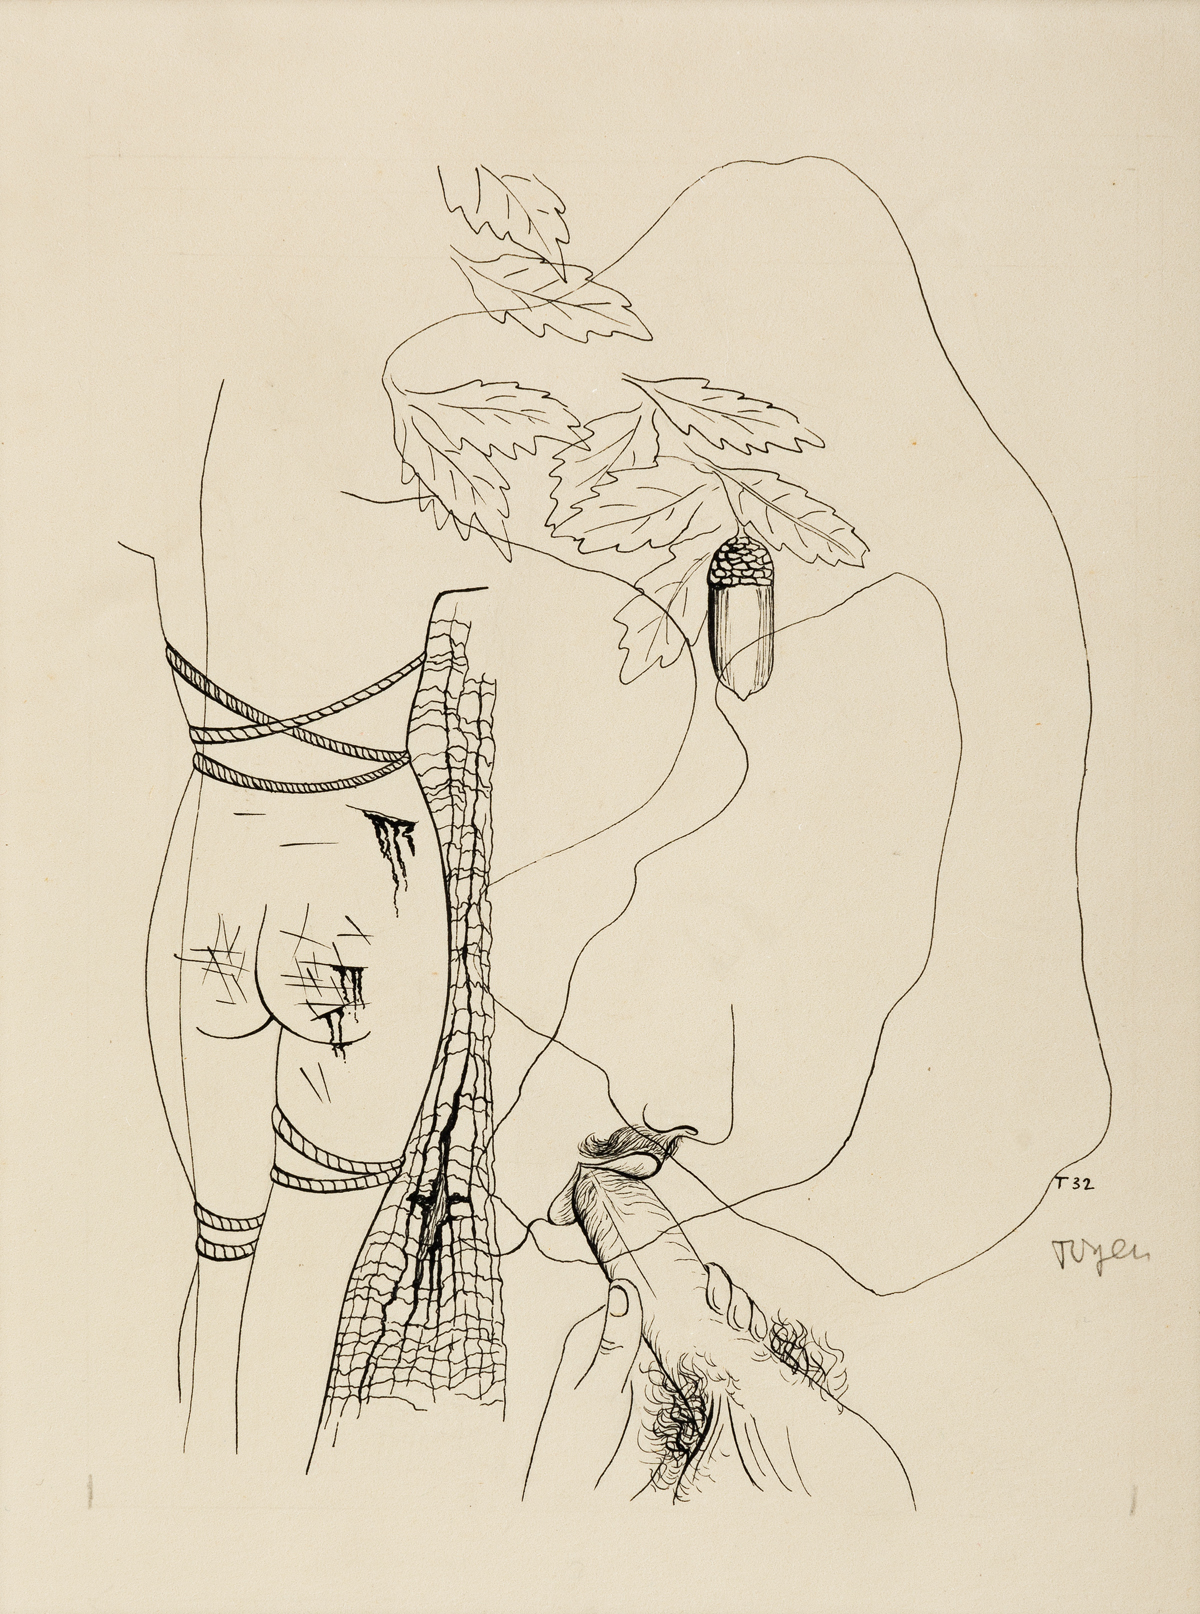 TOYEN (MARIE CERMINOVA, 1902-1980) Erotic Illustration from Marquis de Sade: Justina cili prokletí ctnosti.